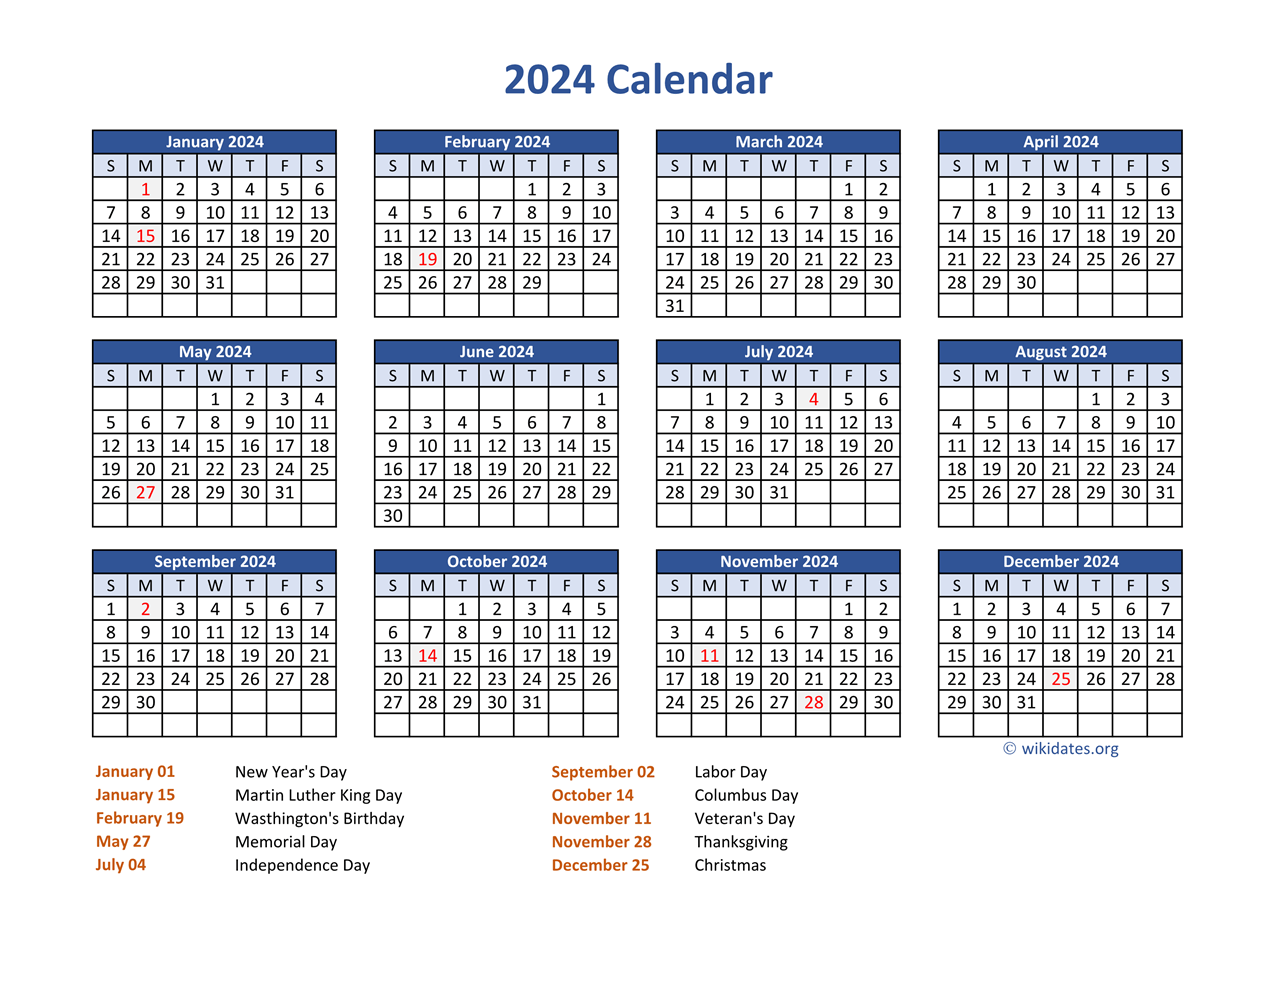 Pdf Calendar 2024 With Federal Holidays | Wikidates for 2024 Calendar With Holidays Usa Printable Free